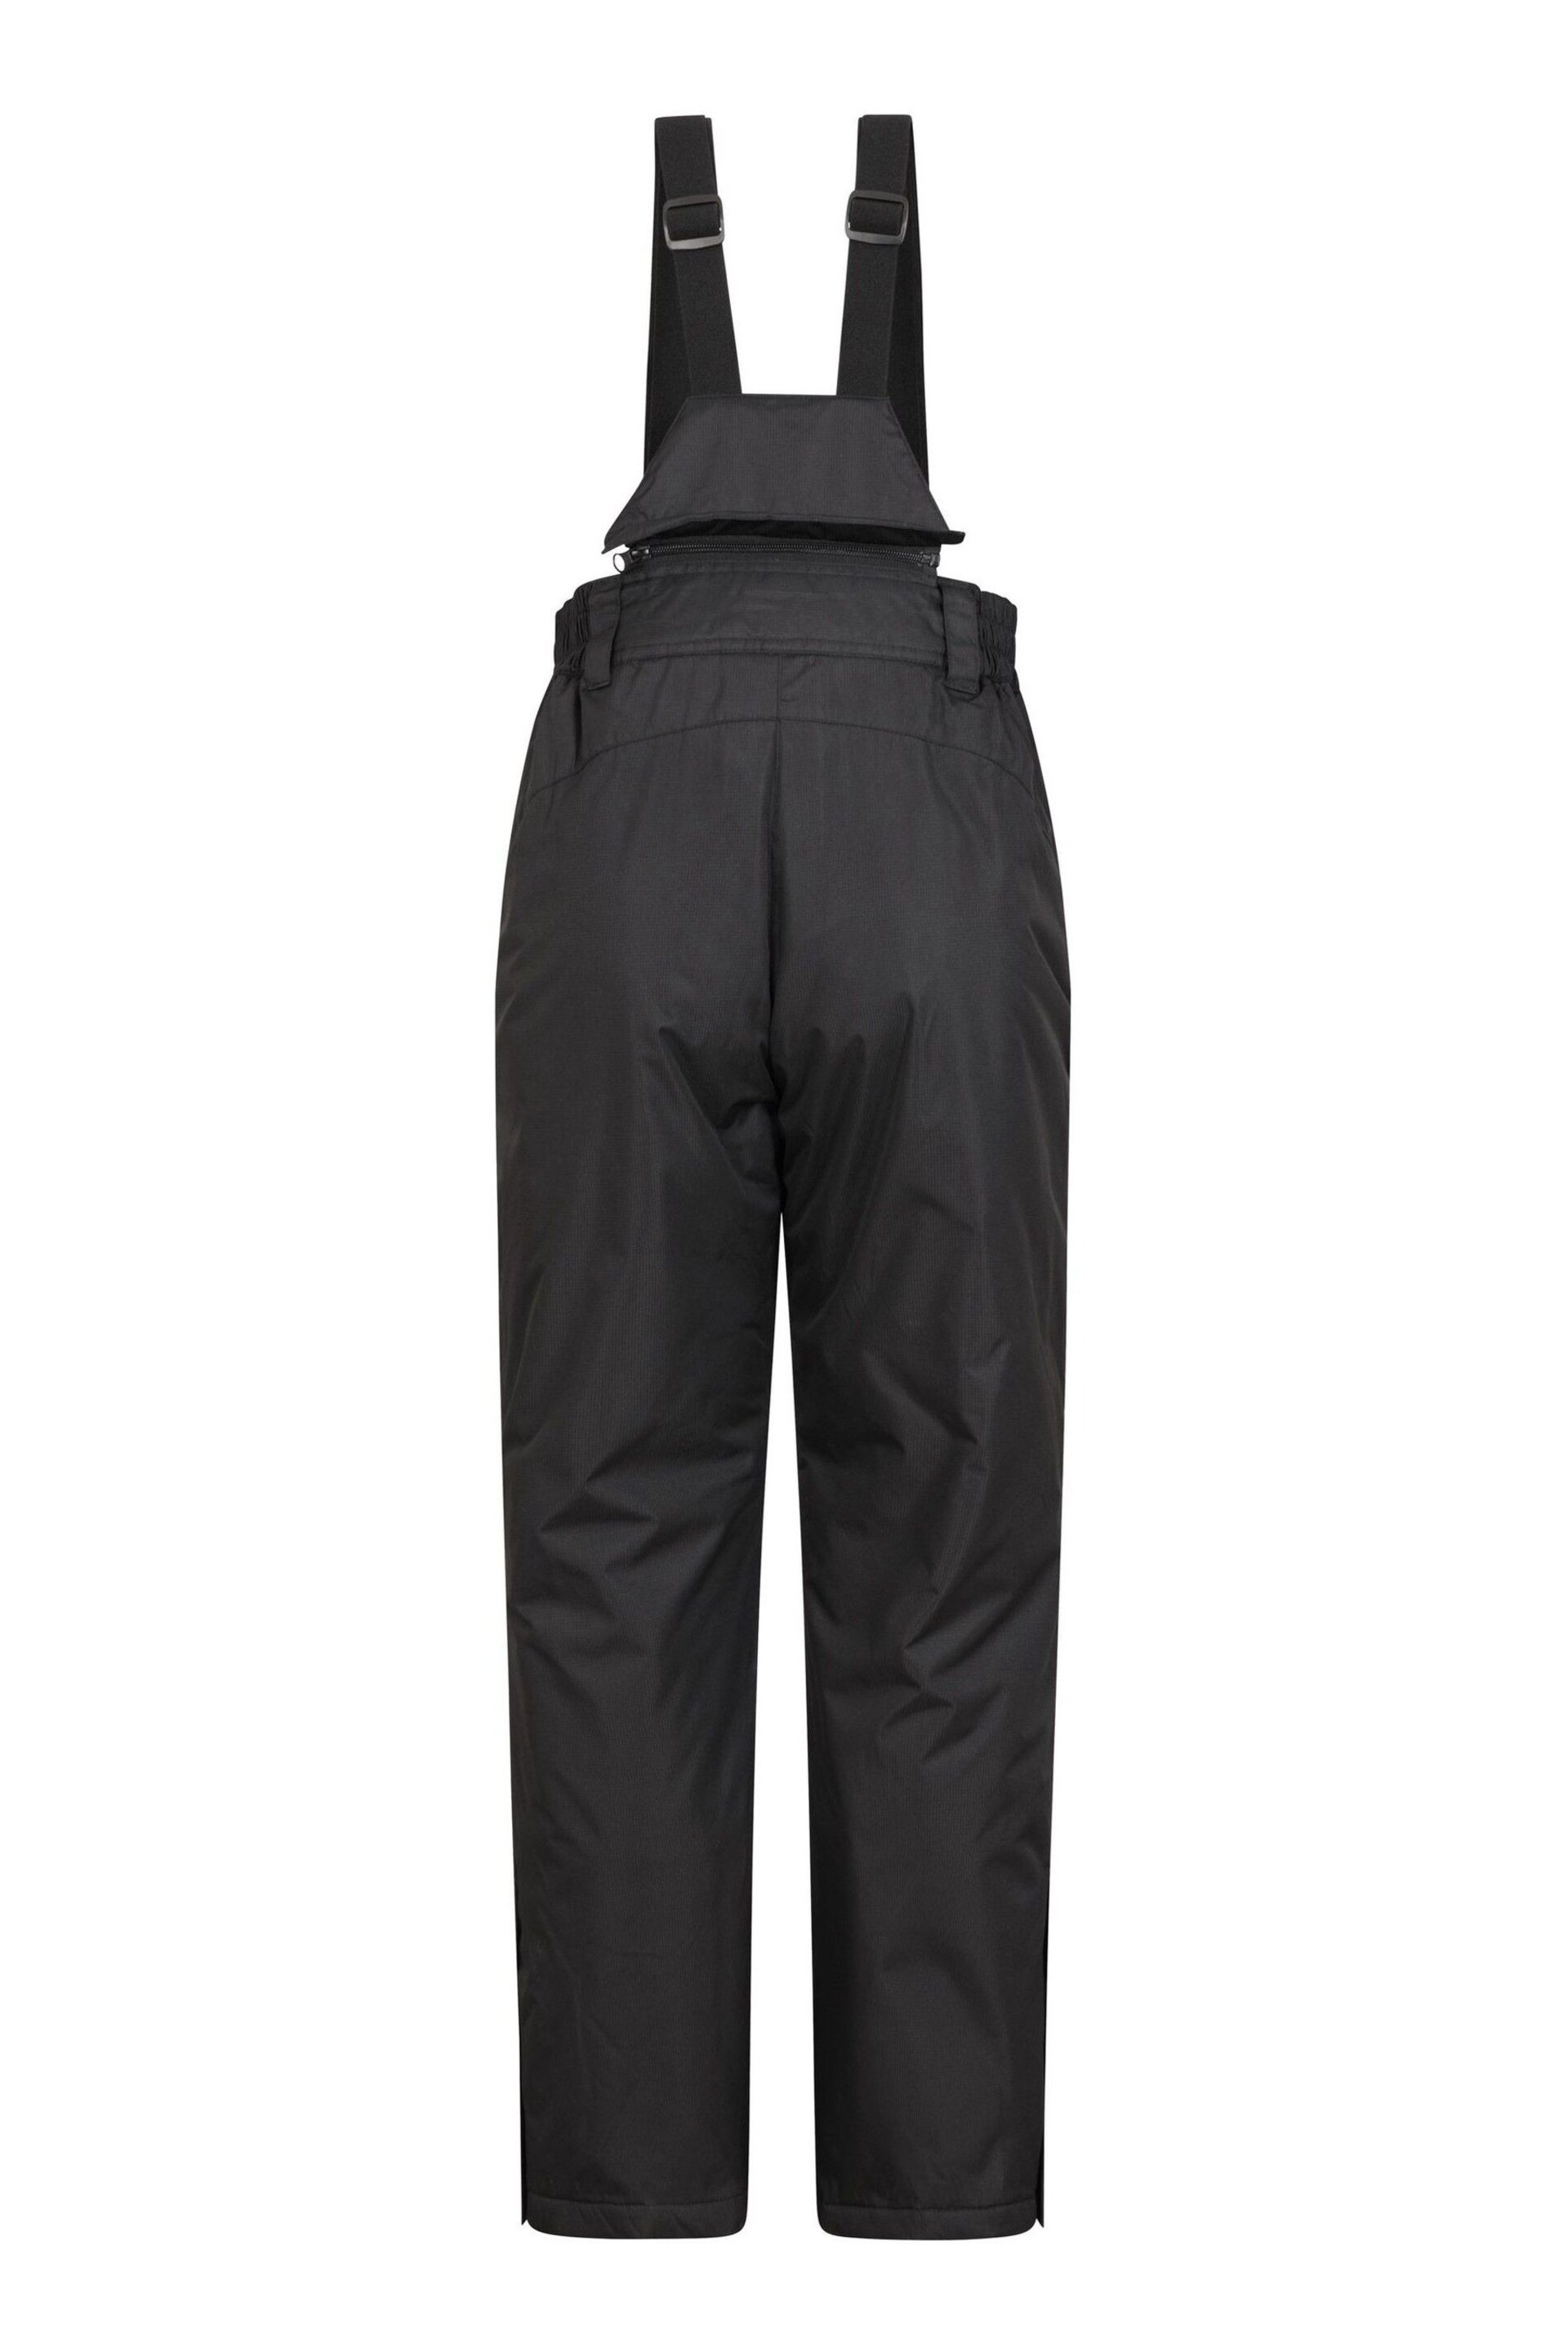 Mountain Warehouse Black Womens Moon Ski Trousers - Image 3 of 5